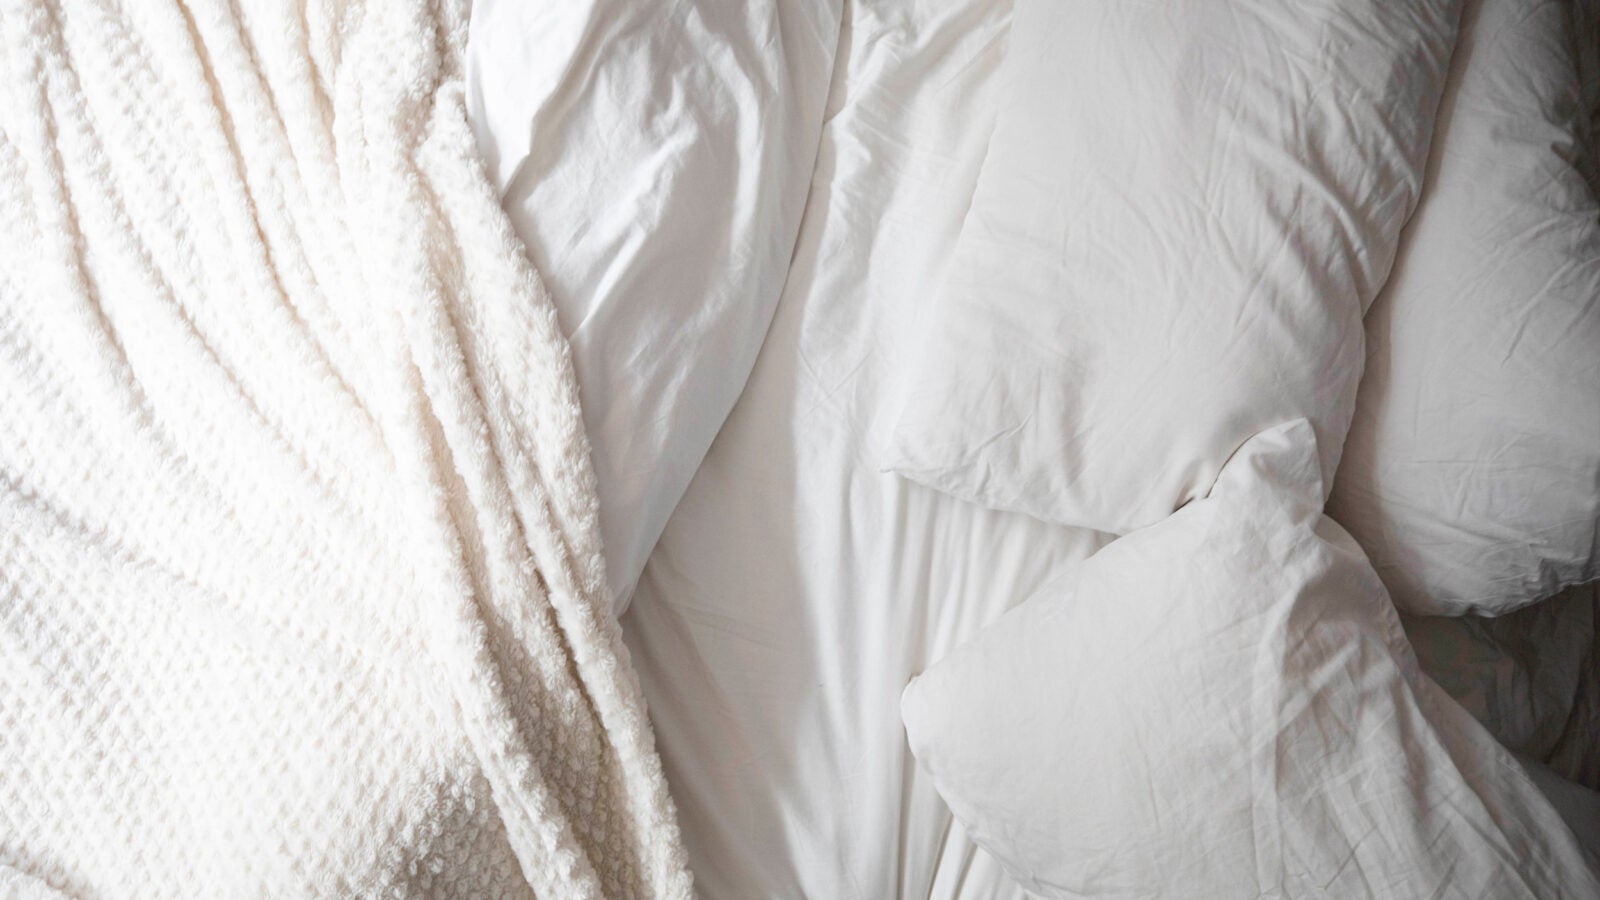 Pillows and sheets.